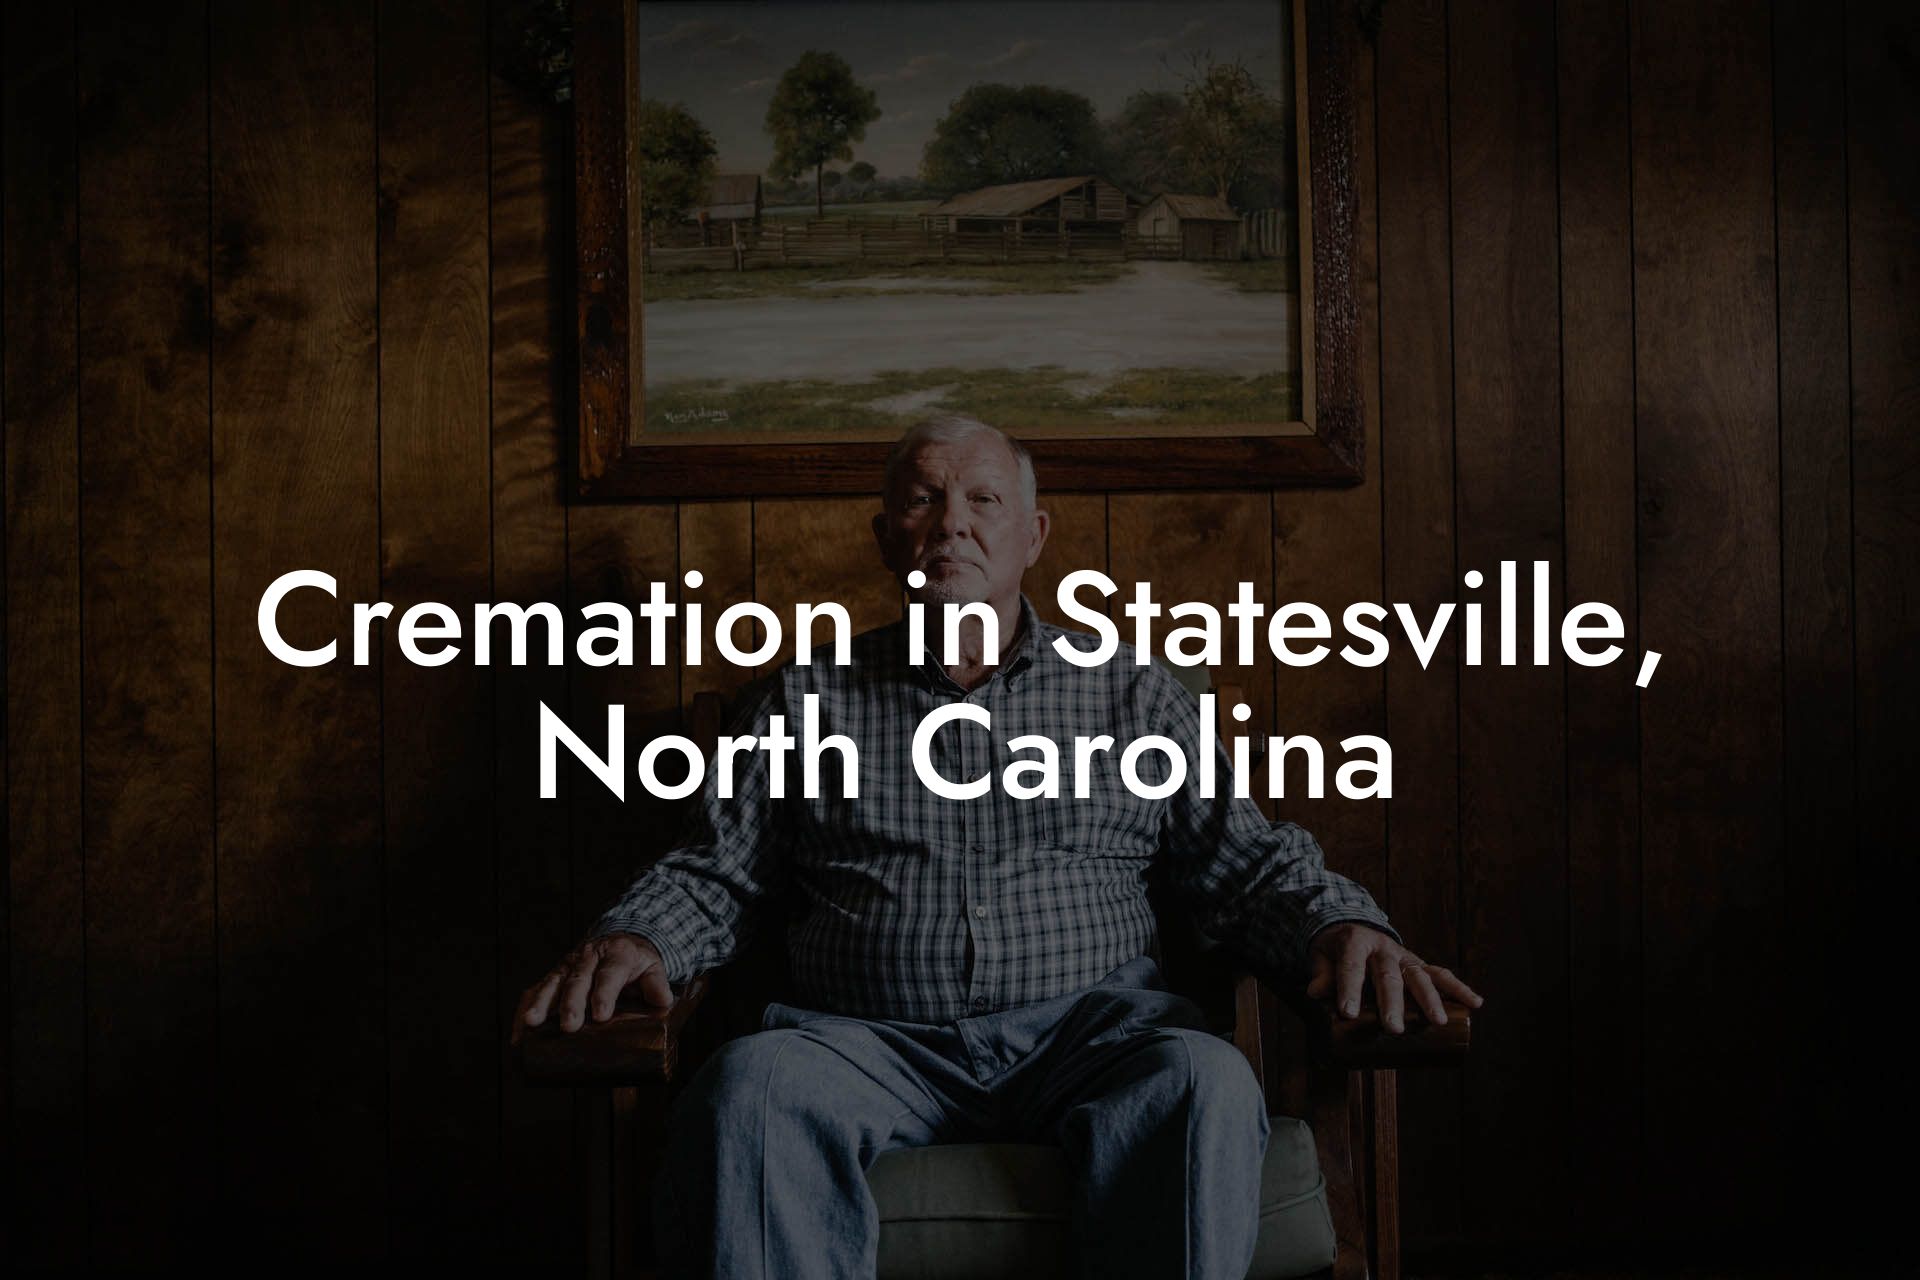 Cremation in Statesville, North Carolina